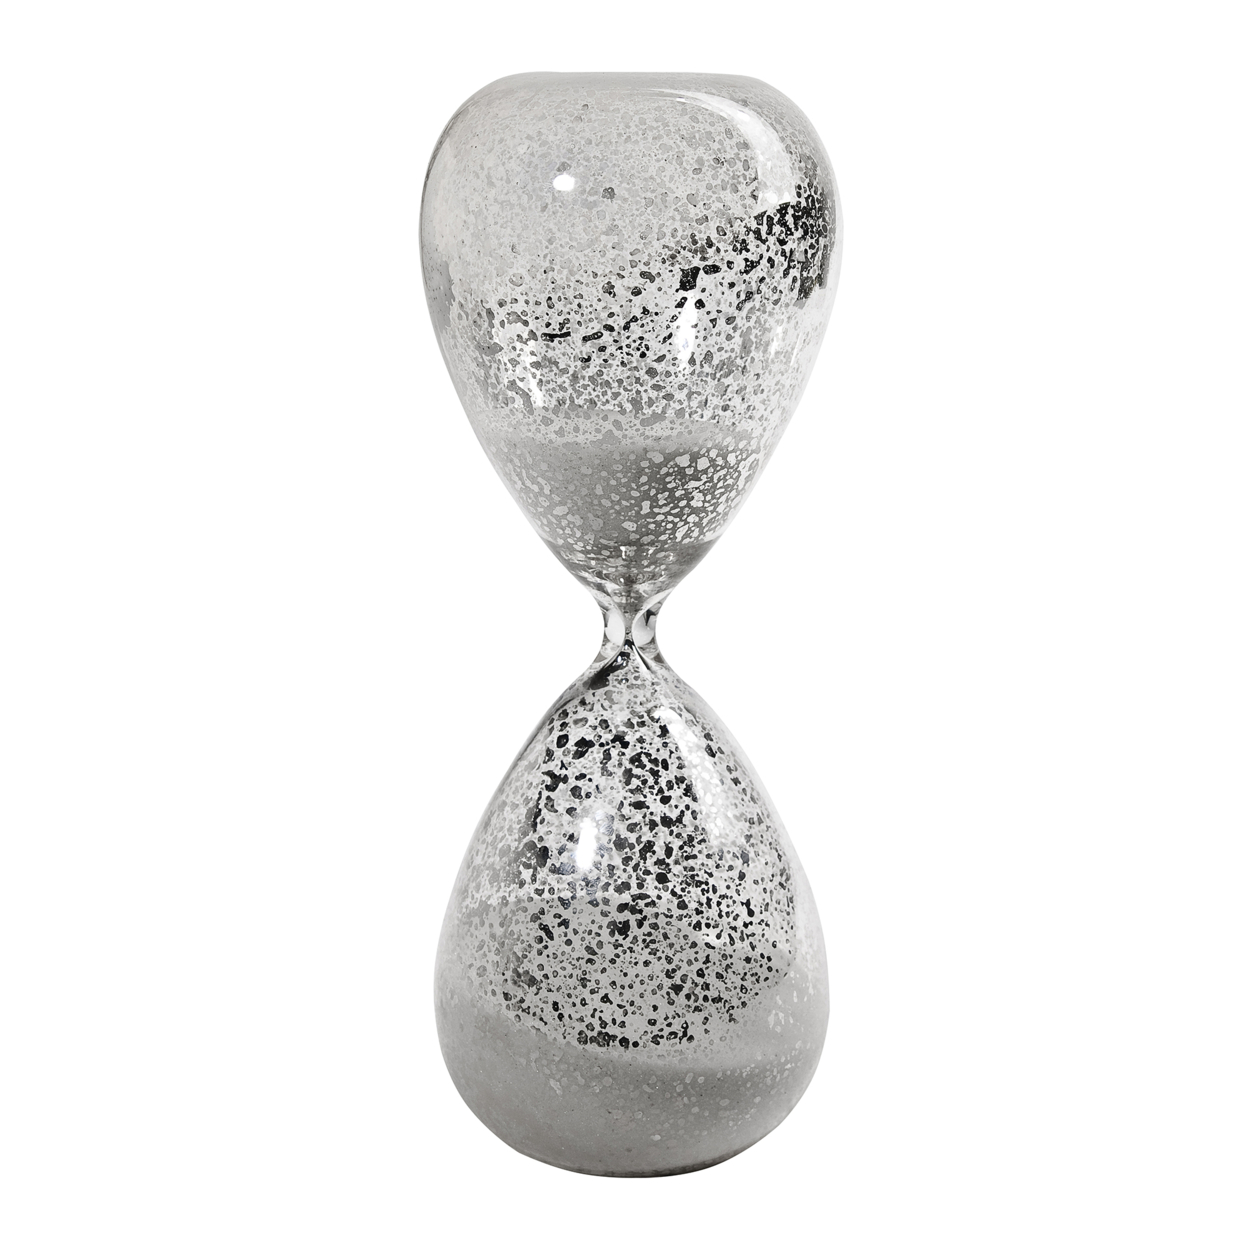 Doug 10 Inch Decorative 60 Minute Hourglass Table Accent Decor, White Sand- Saltoro Sherpi